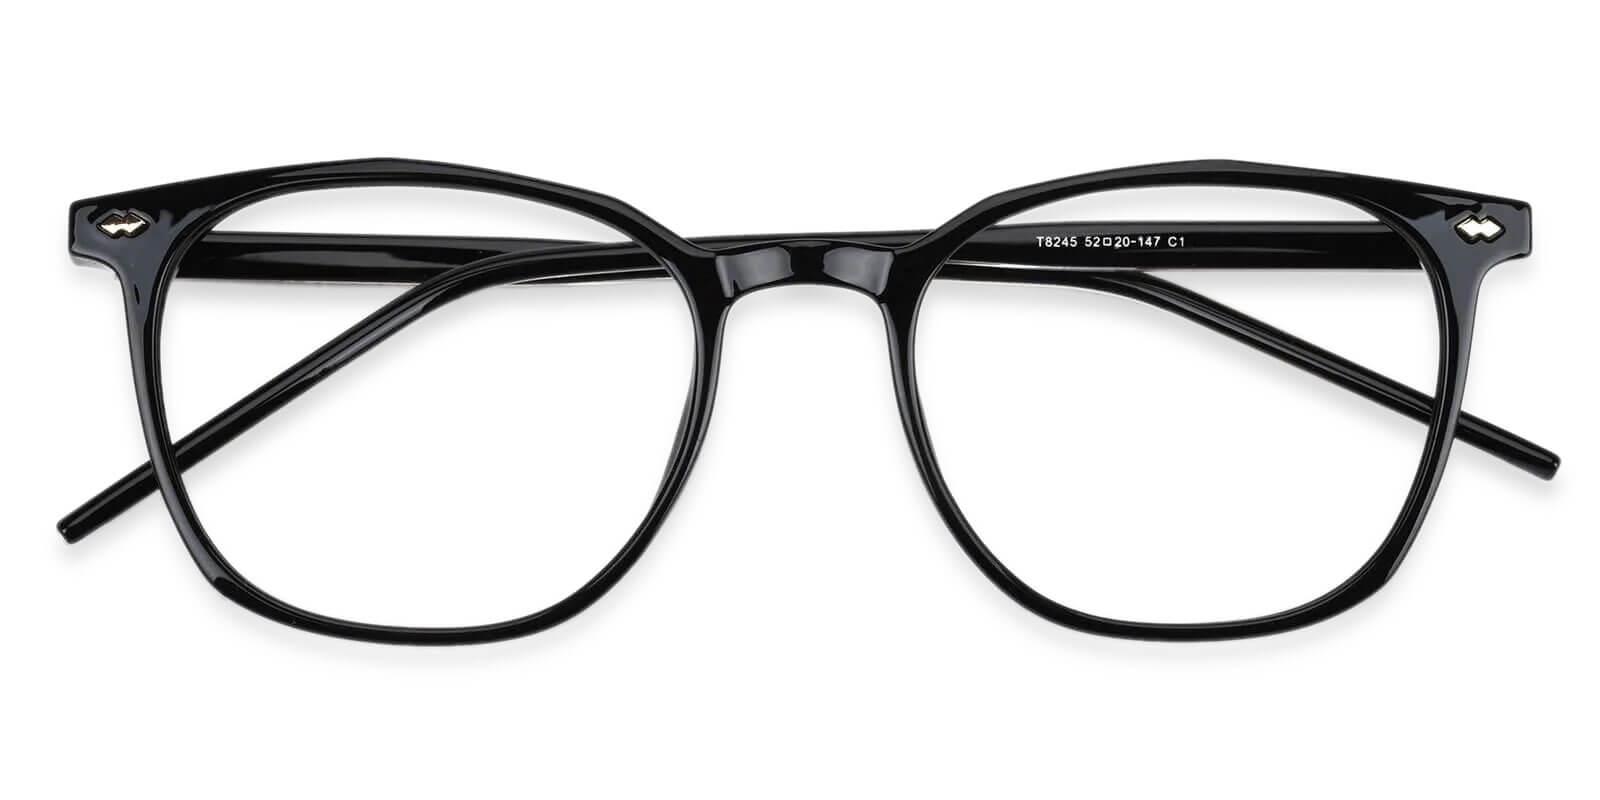 Prodigy Black Acetate Eyeglasses , SpringHinges , UniversalBridgeFit Frames from ABBE Glasses